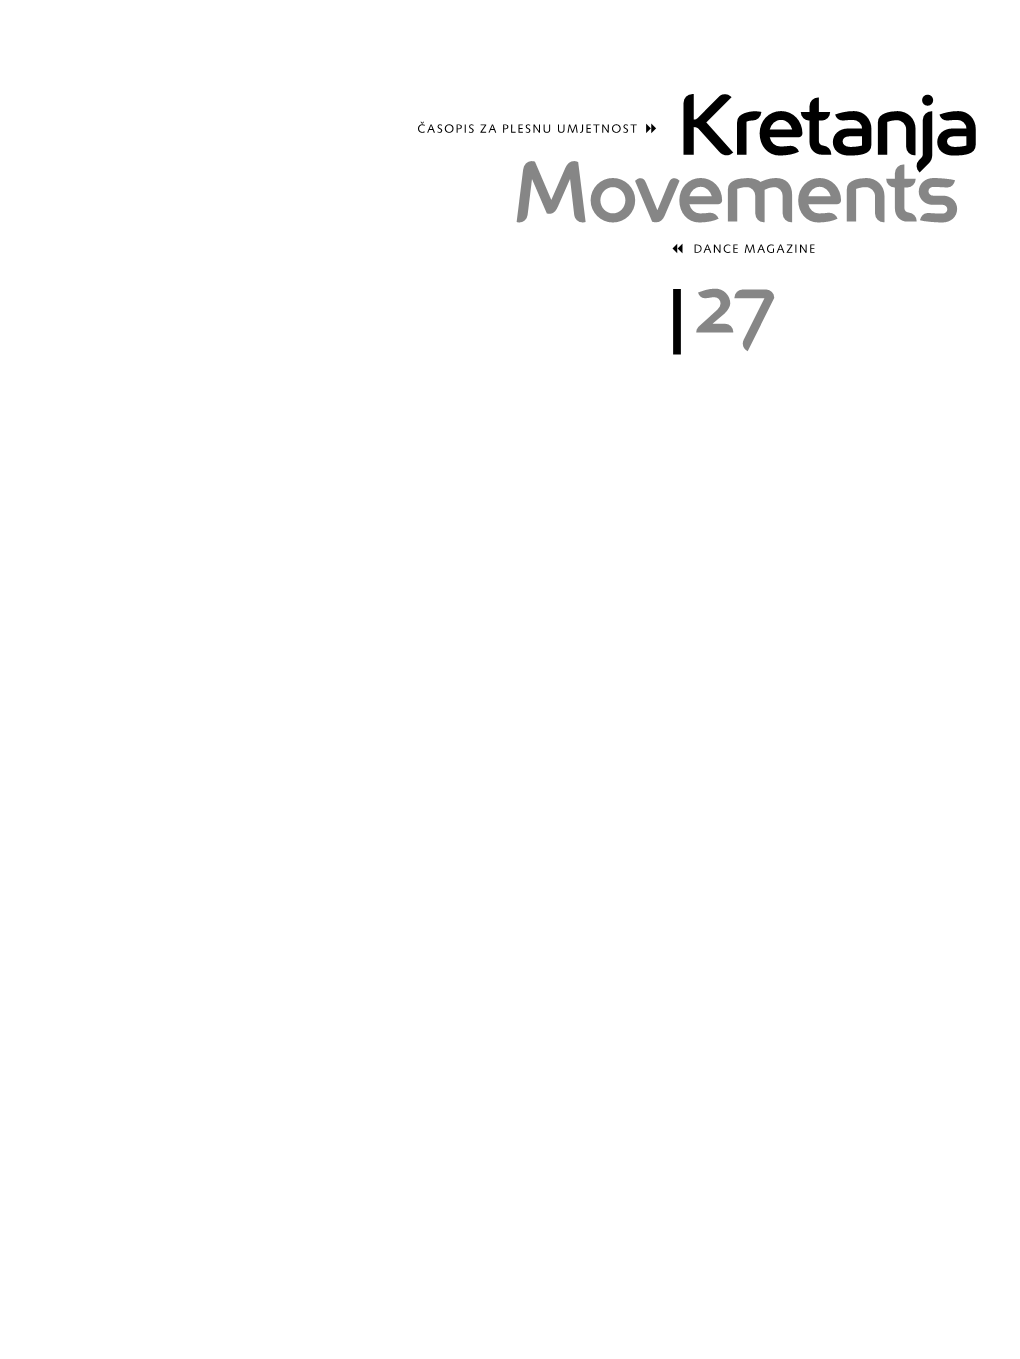 Kretanja Movements  DANCE MAGAZINE 27 8 Sadržajl Contents